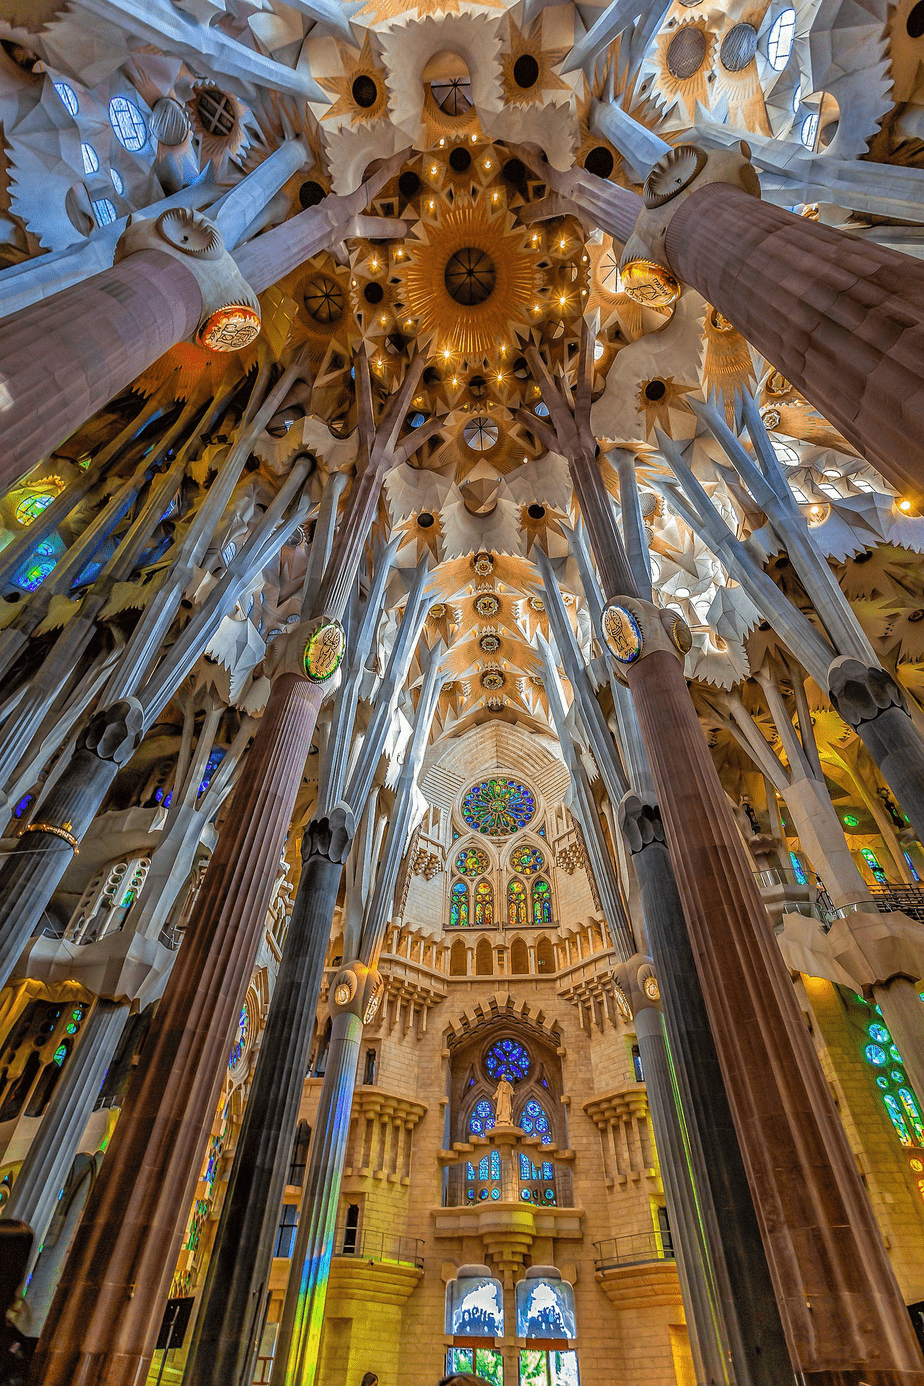 Sagrada Familia by Gaudi - Basilica in Barcelona, Spain - 137 Year Project 34